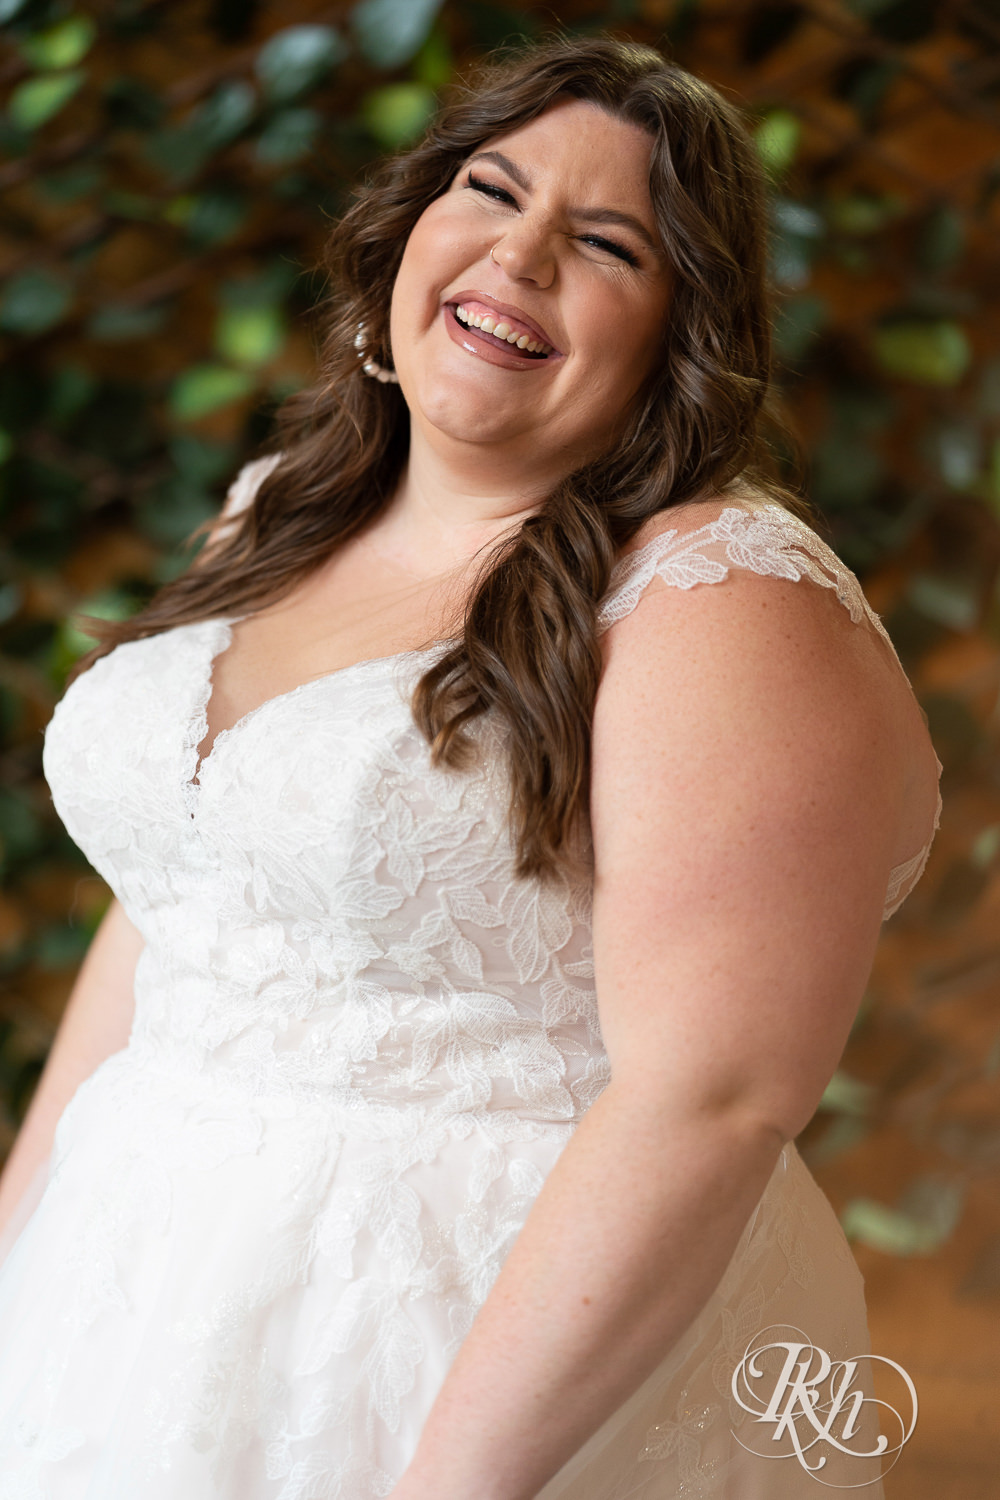 Plus size bride looking over shoulder in wedding dresses in Minneapolis, Minnesota.